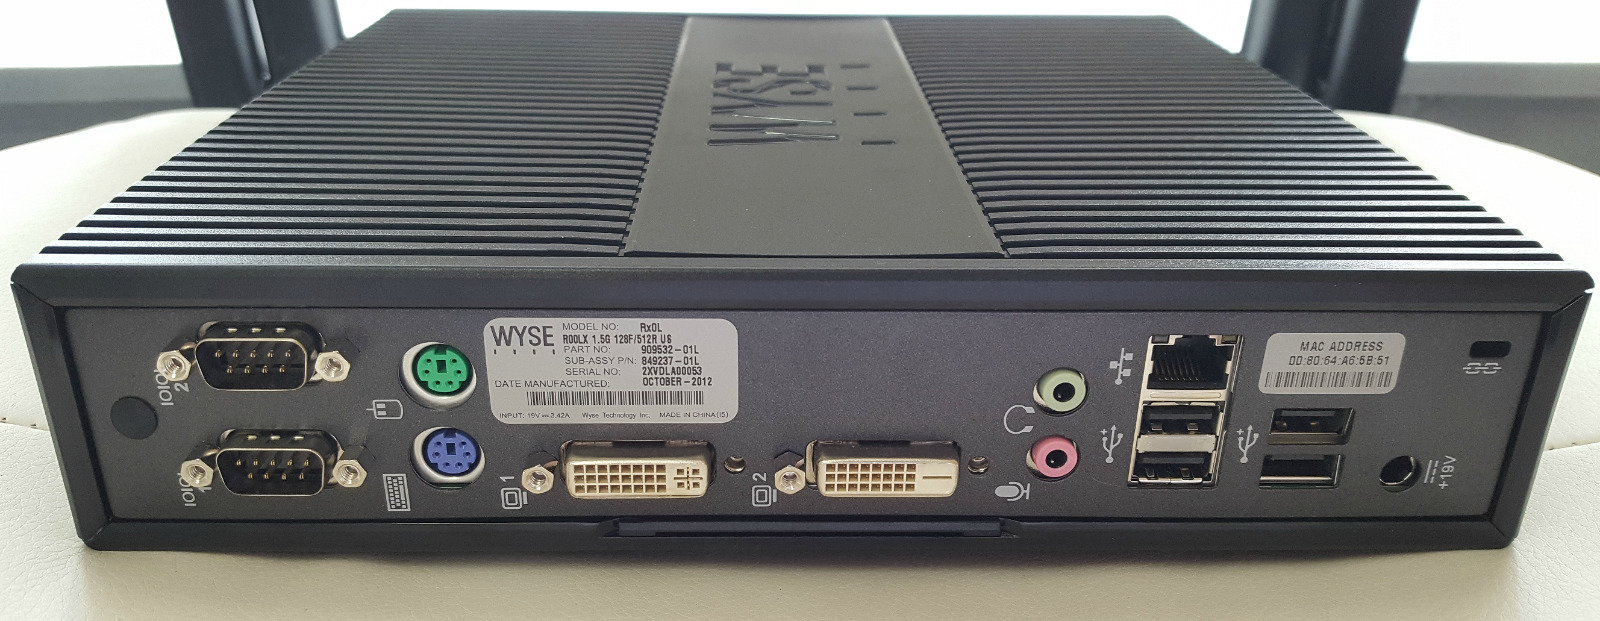 Wyse Rx0 - Windows XP Retro Gaming PC - AMD 1.5ghz, ATI x1200, 1GB Ram, 16GB SSD